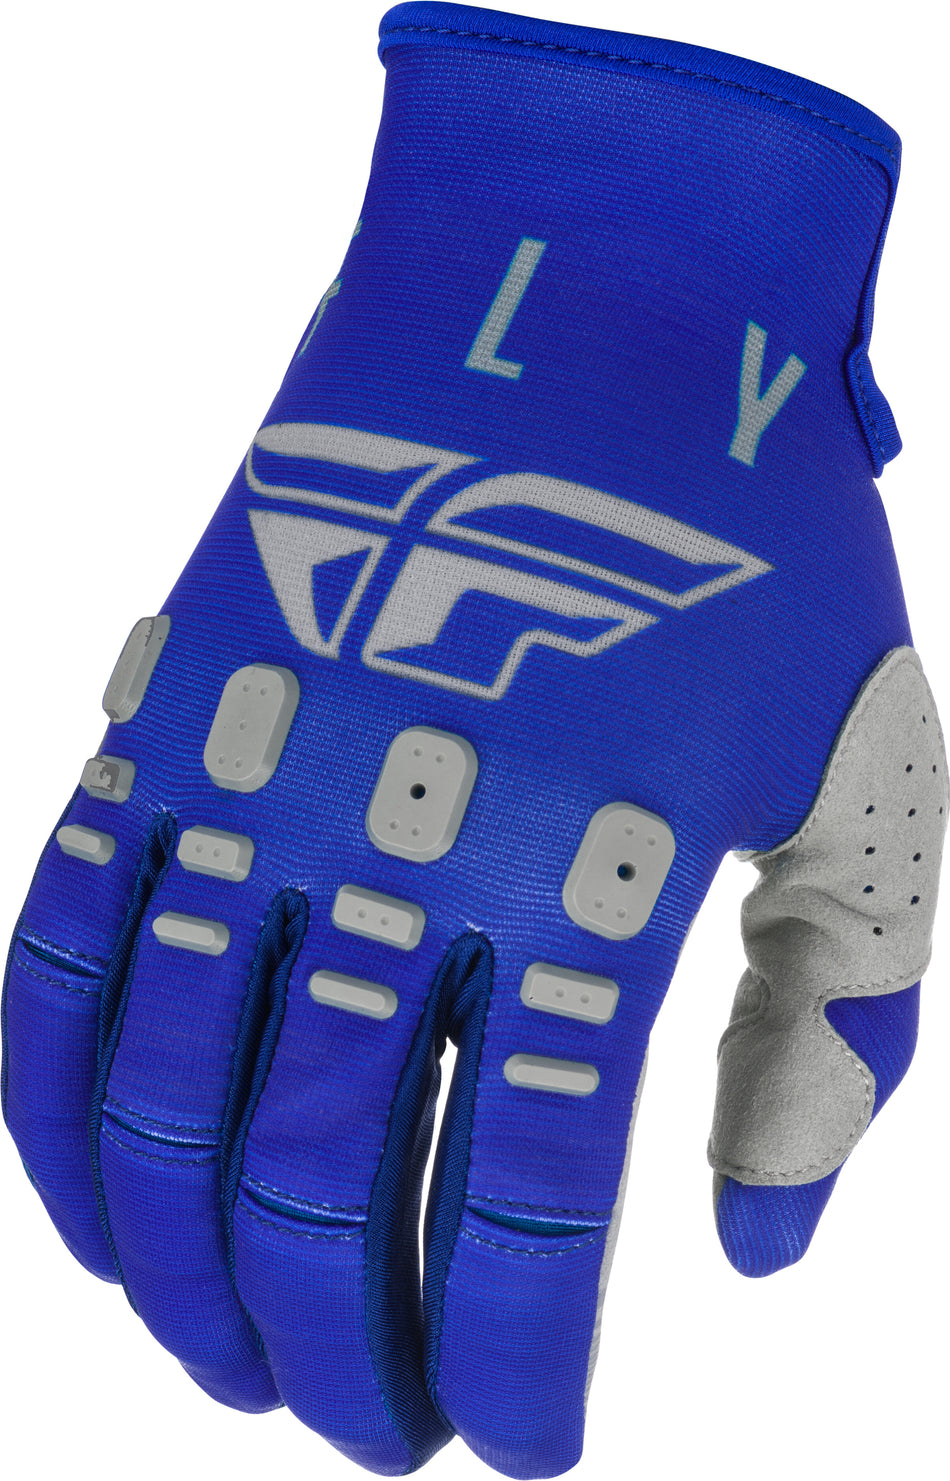 FLY RACING Kinetic K121 Gloves Blue/Navy/Grey Sz 07 374-41107